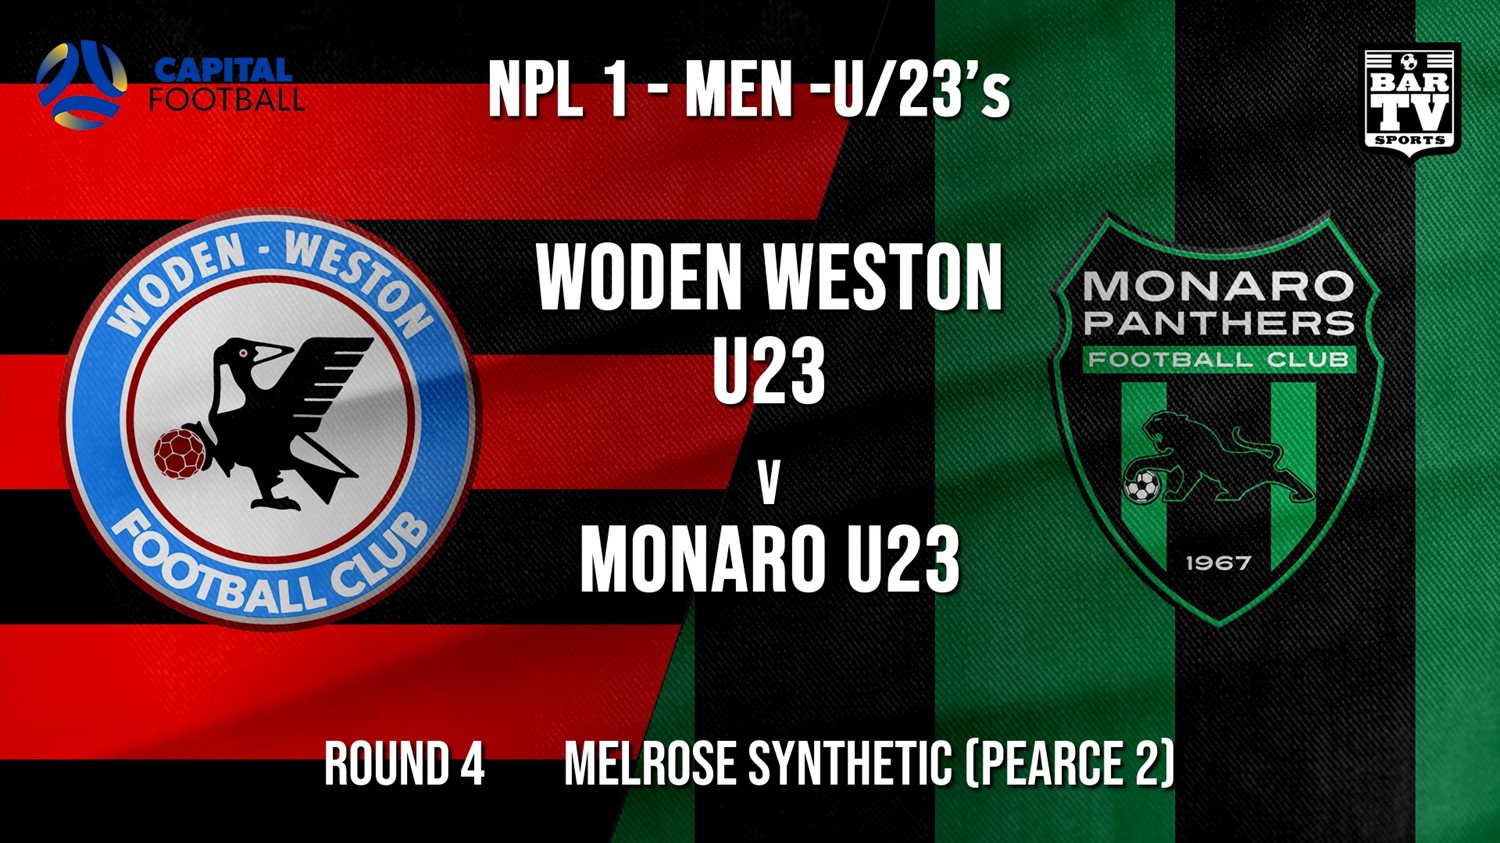 NPL1 Men - U23 - Capital Football  Round 4 - Woden Weston U23 v Monaro Panthers U23 Minigame Slate Image